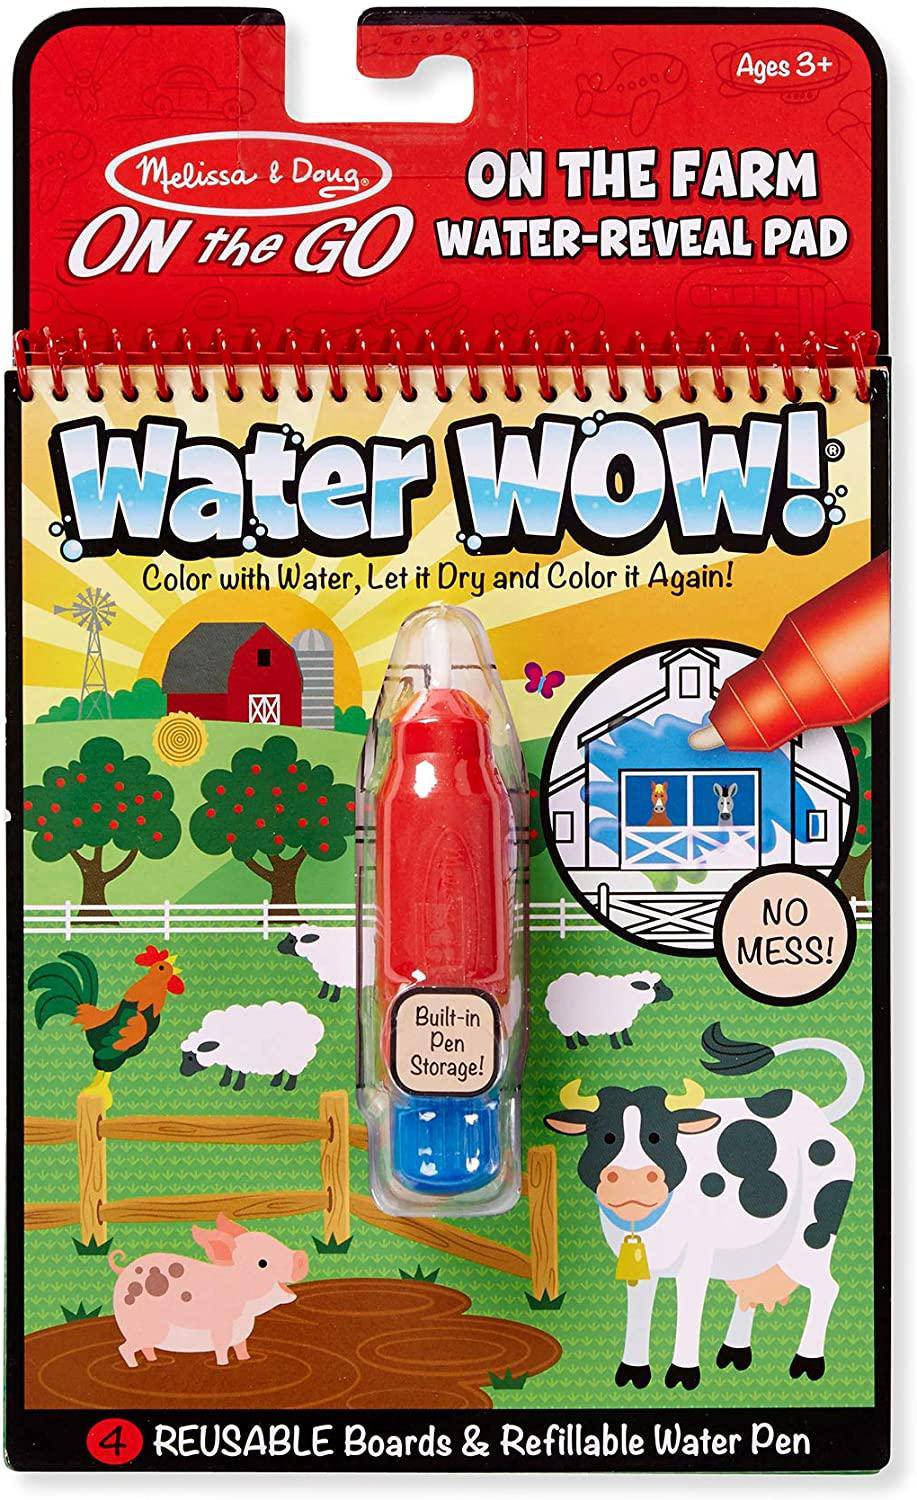 Water Wow! - Farm - SureShot Books Publishing LLC